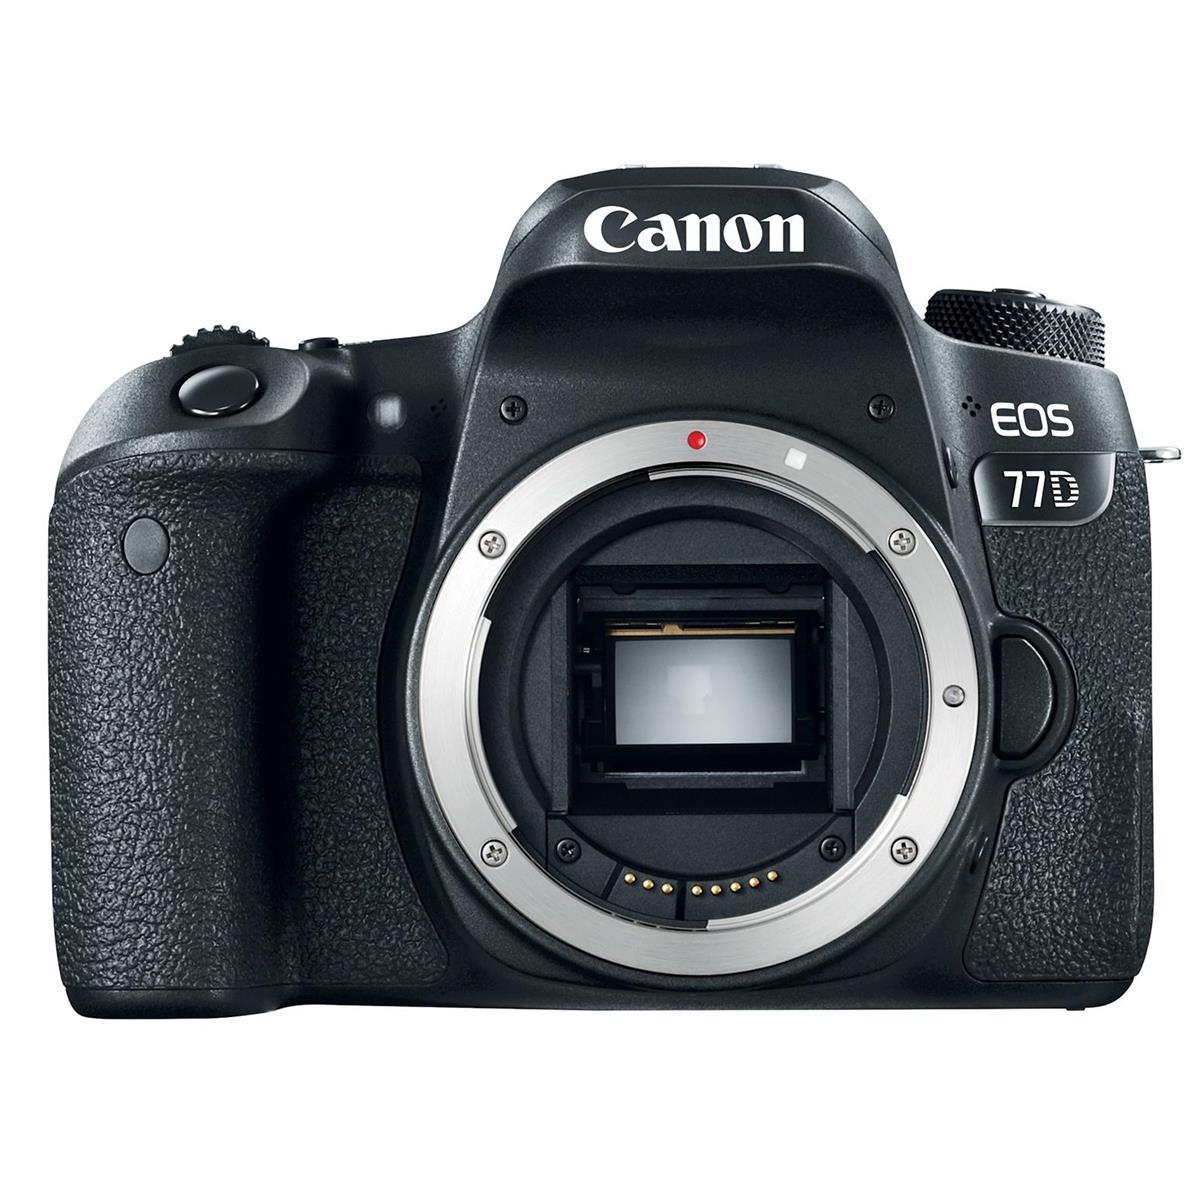 Image of Canon EOS 77D DSLR Body